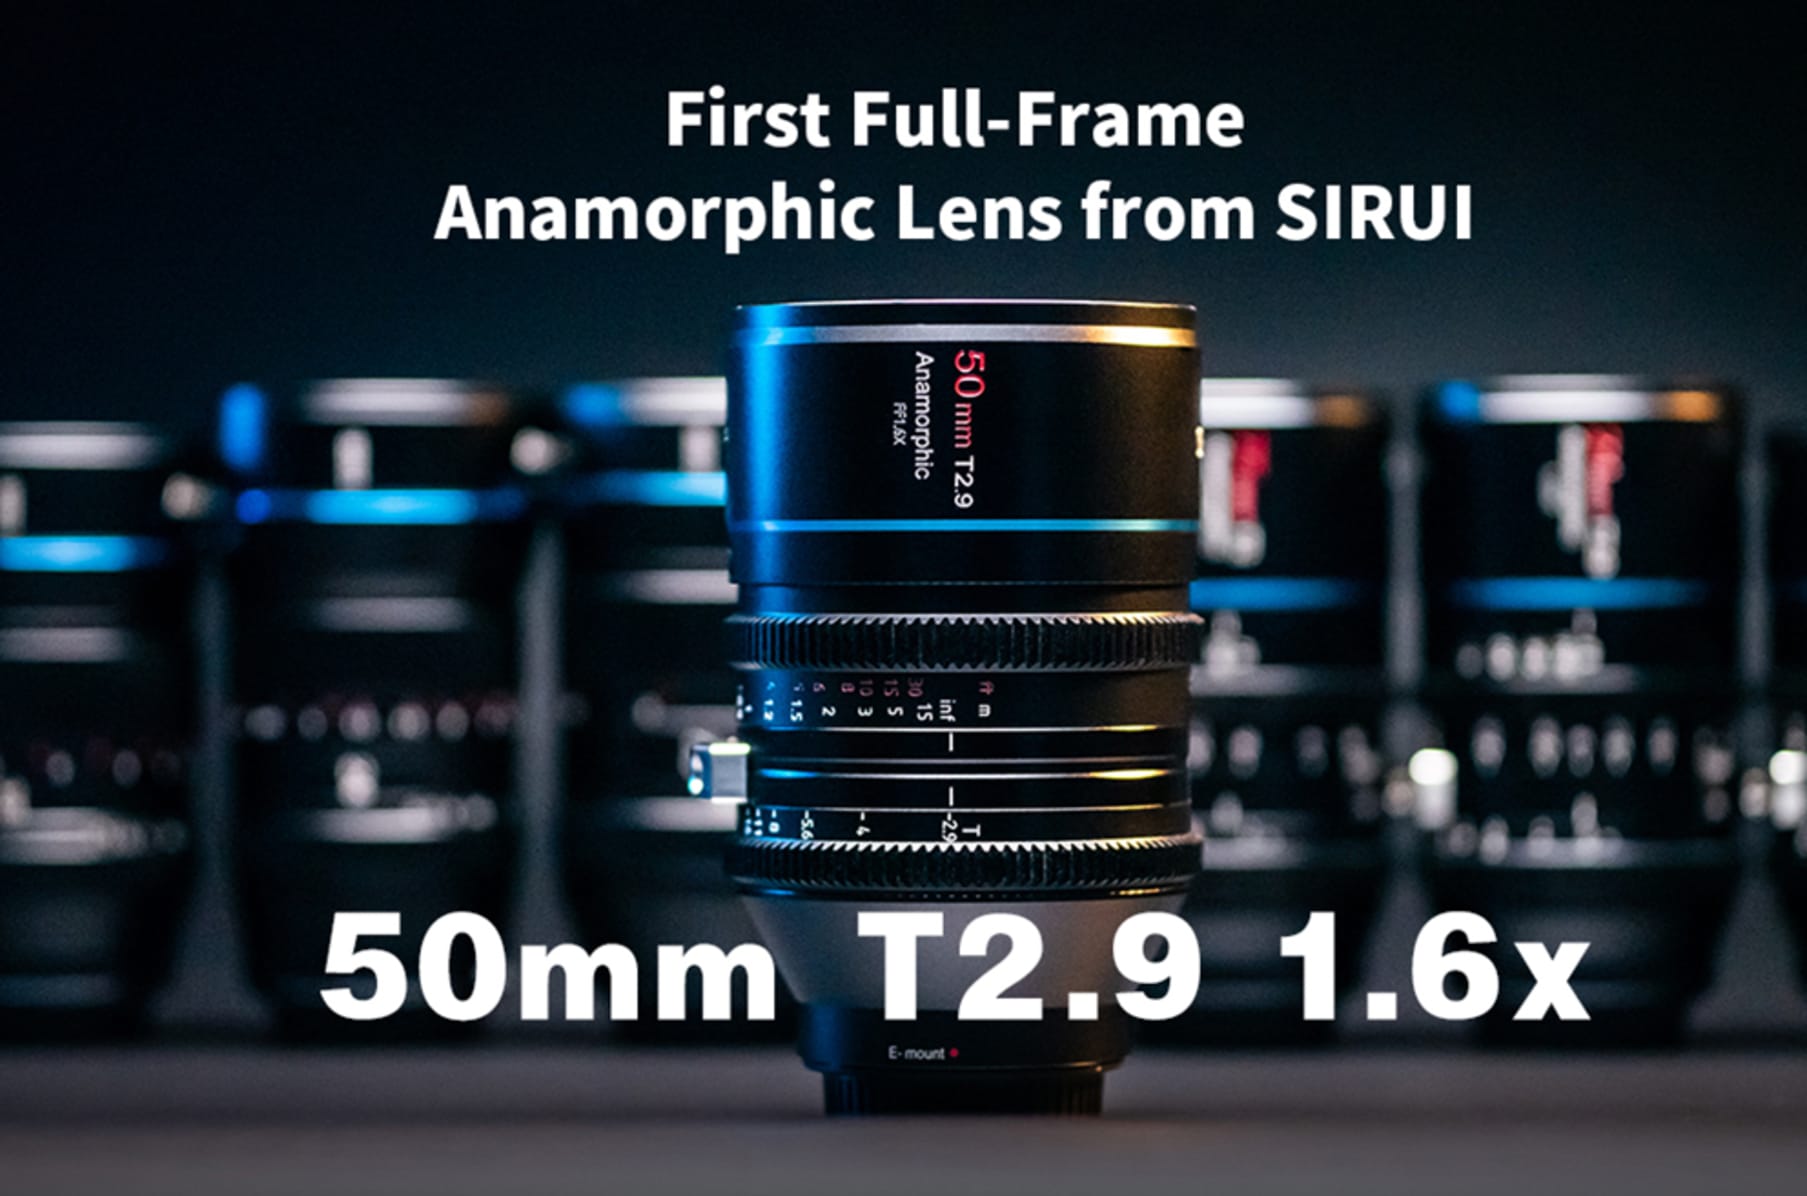 SIRUI 50mm T2.9 1.6x Full-Frame Anamorphic Lens | Indiegogo